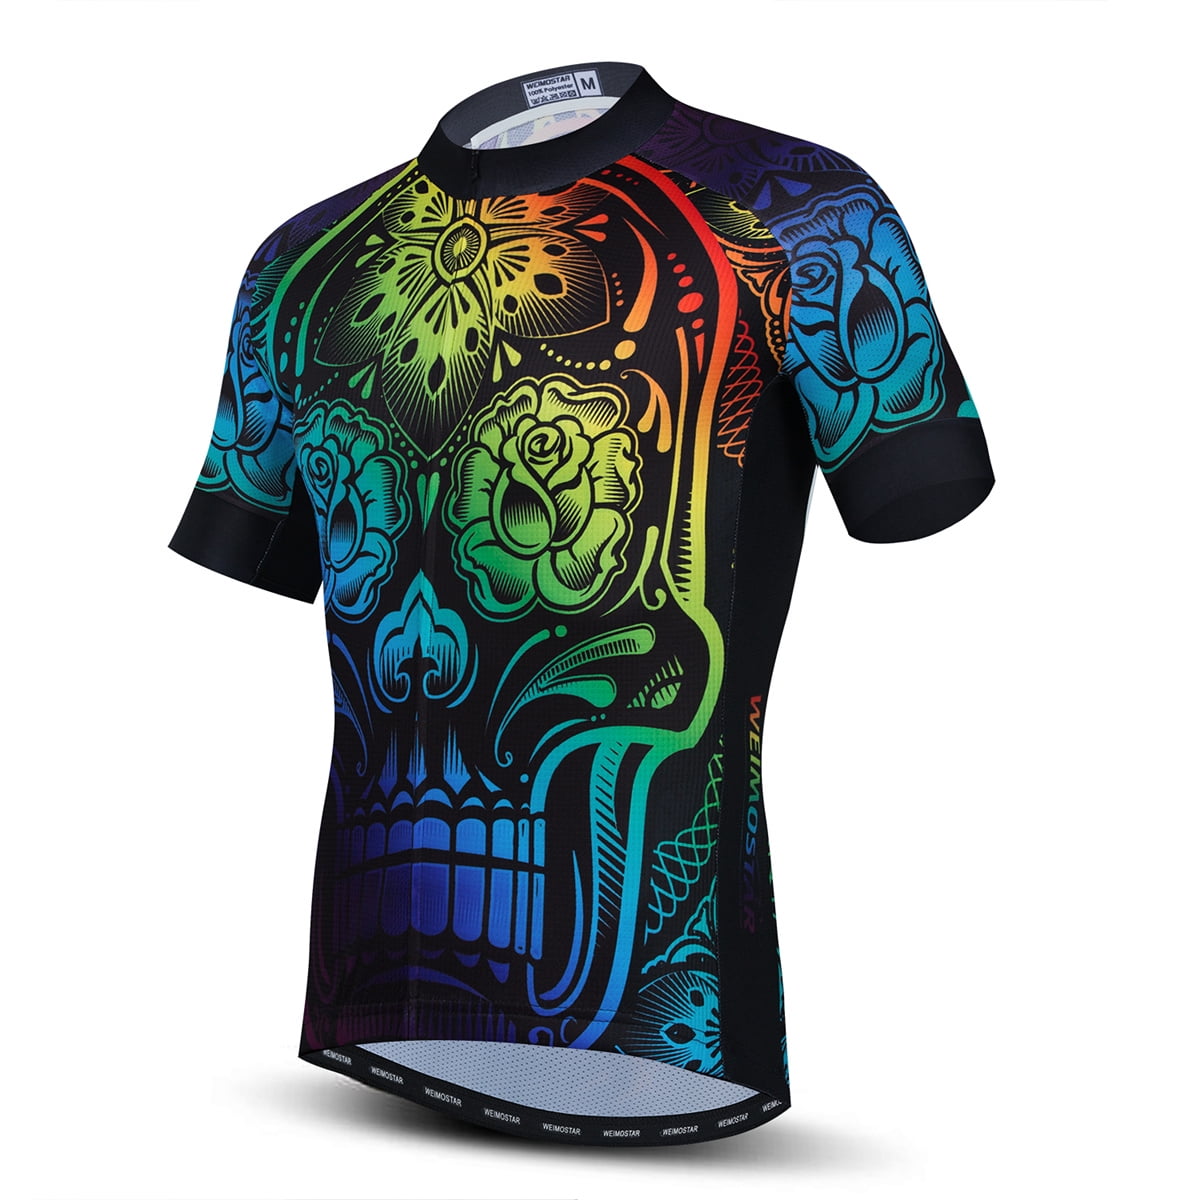 Mens Cycling Jersey short sleeve Bicycle Tops Maillots Shirt Breathable Jerseys